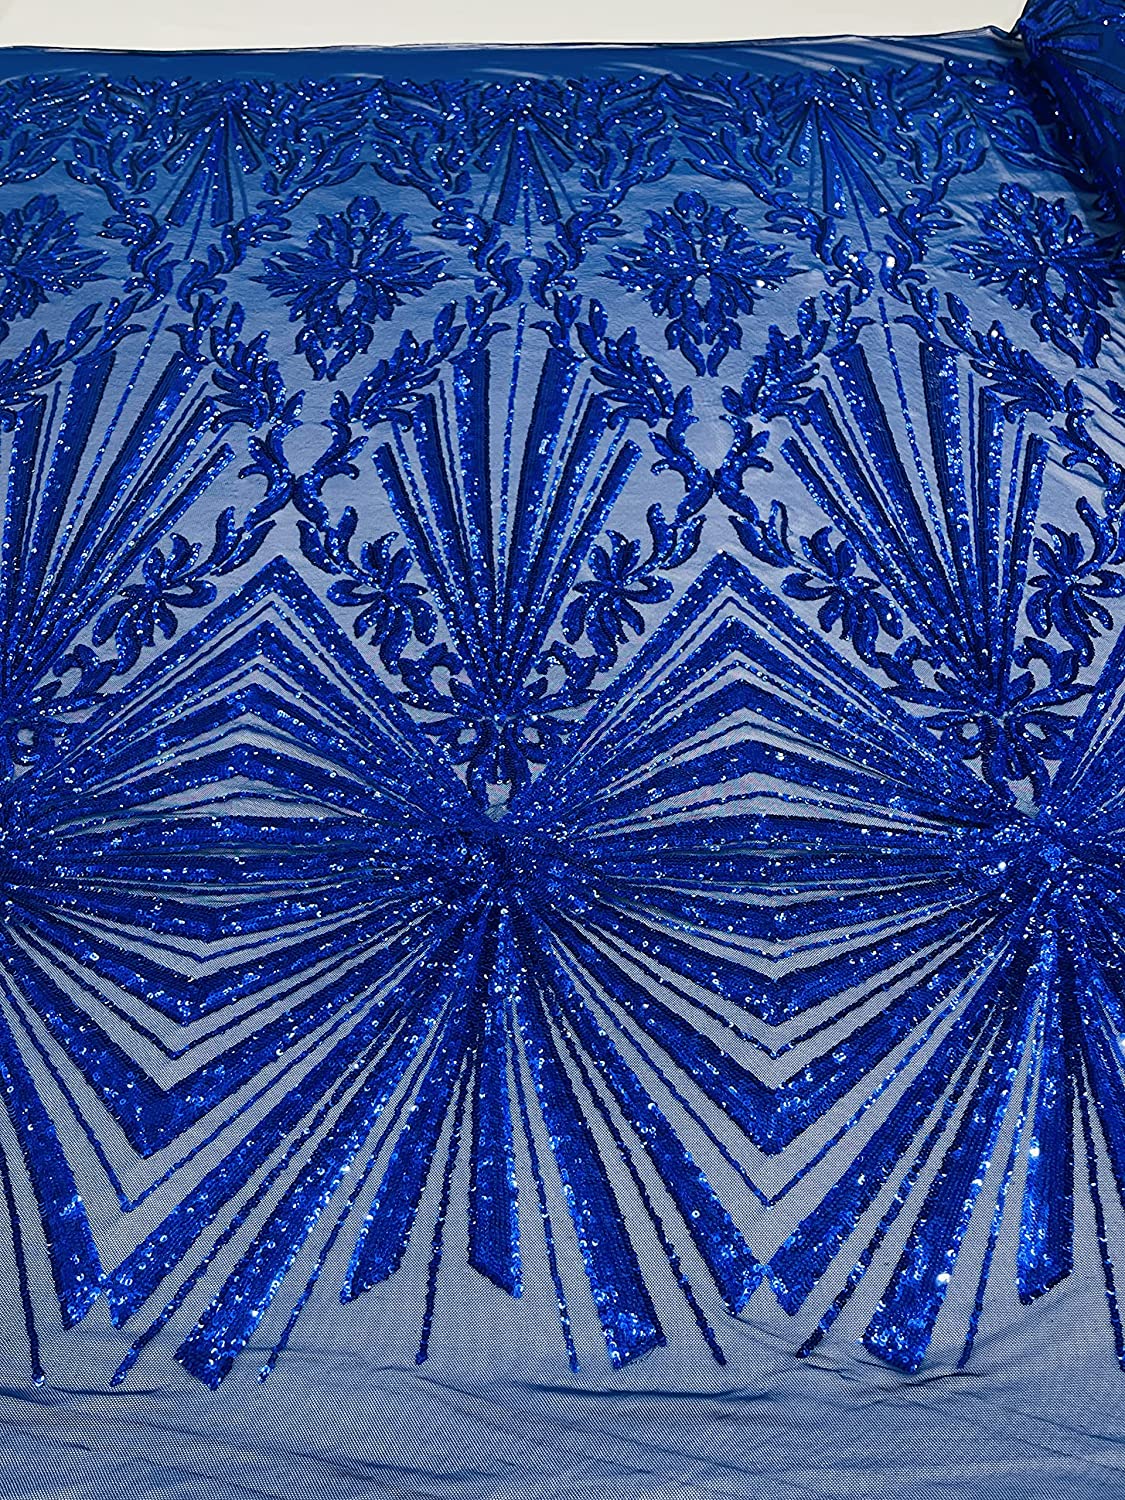 Diamond Damask Design On A Nude 4 Way Stretch Mesh/Prom Fabric (1 Yard, Royal Blue)